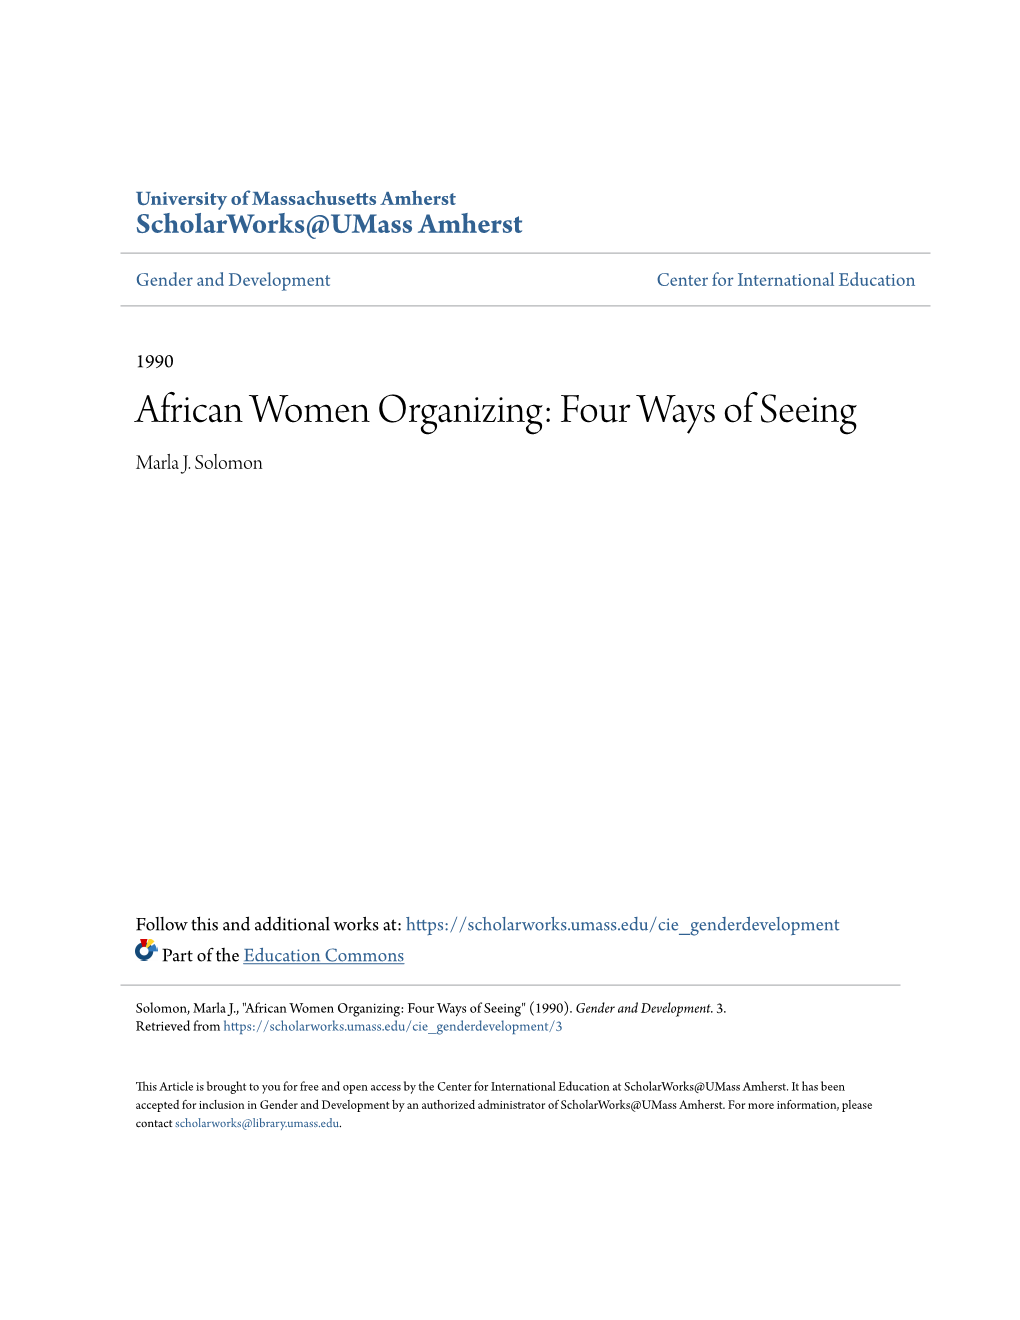 African Women Organizing: Four Ways of Seeing Marla J